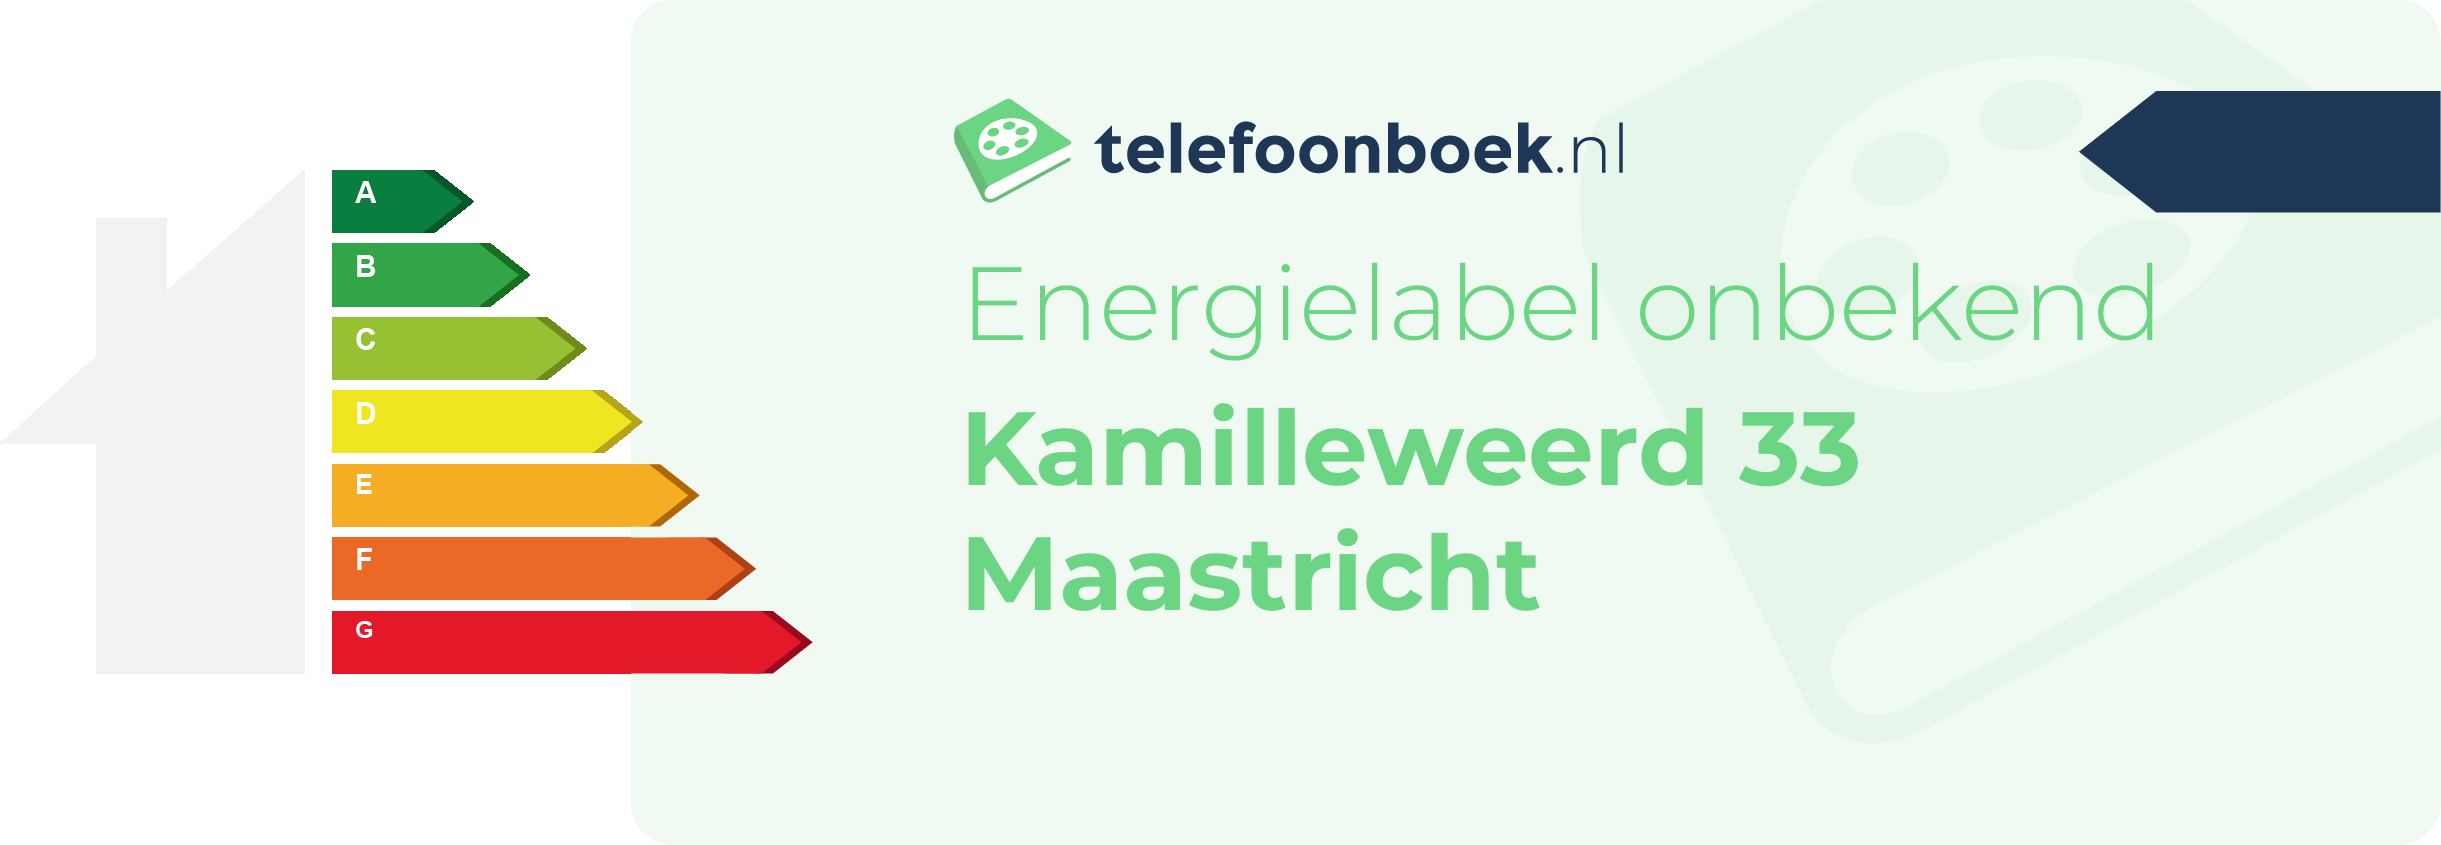 Energielabel Kamilleweerd 33 Maastricht